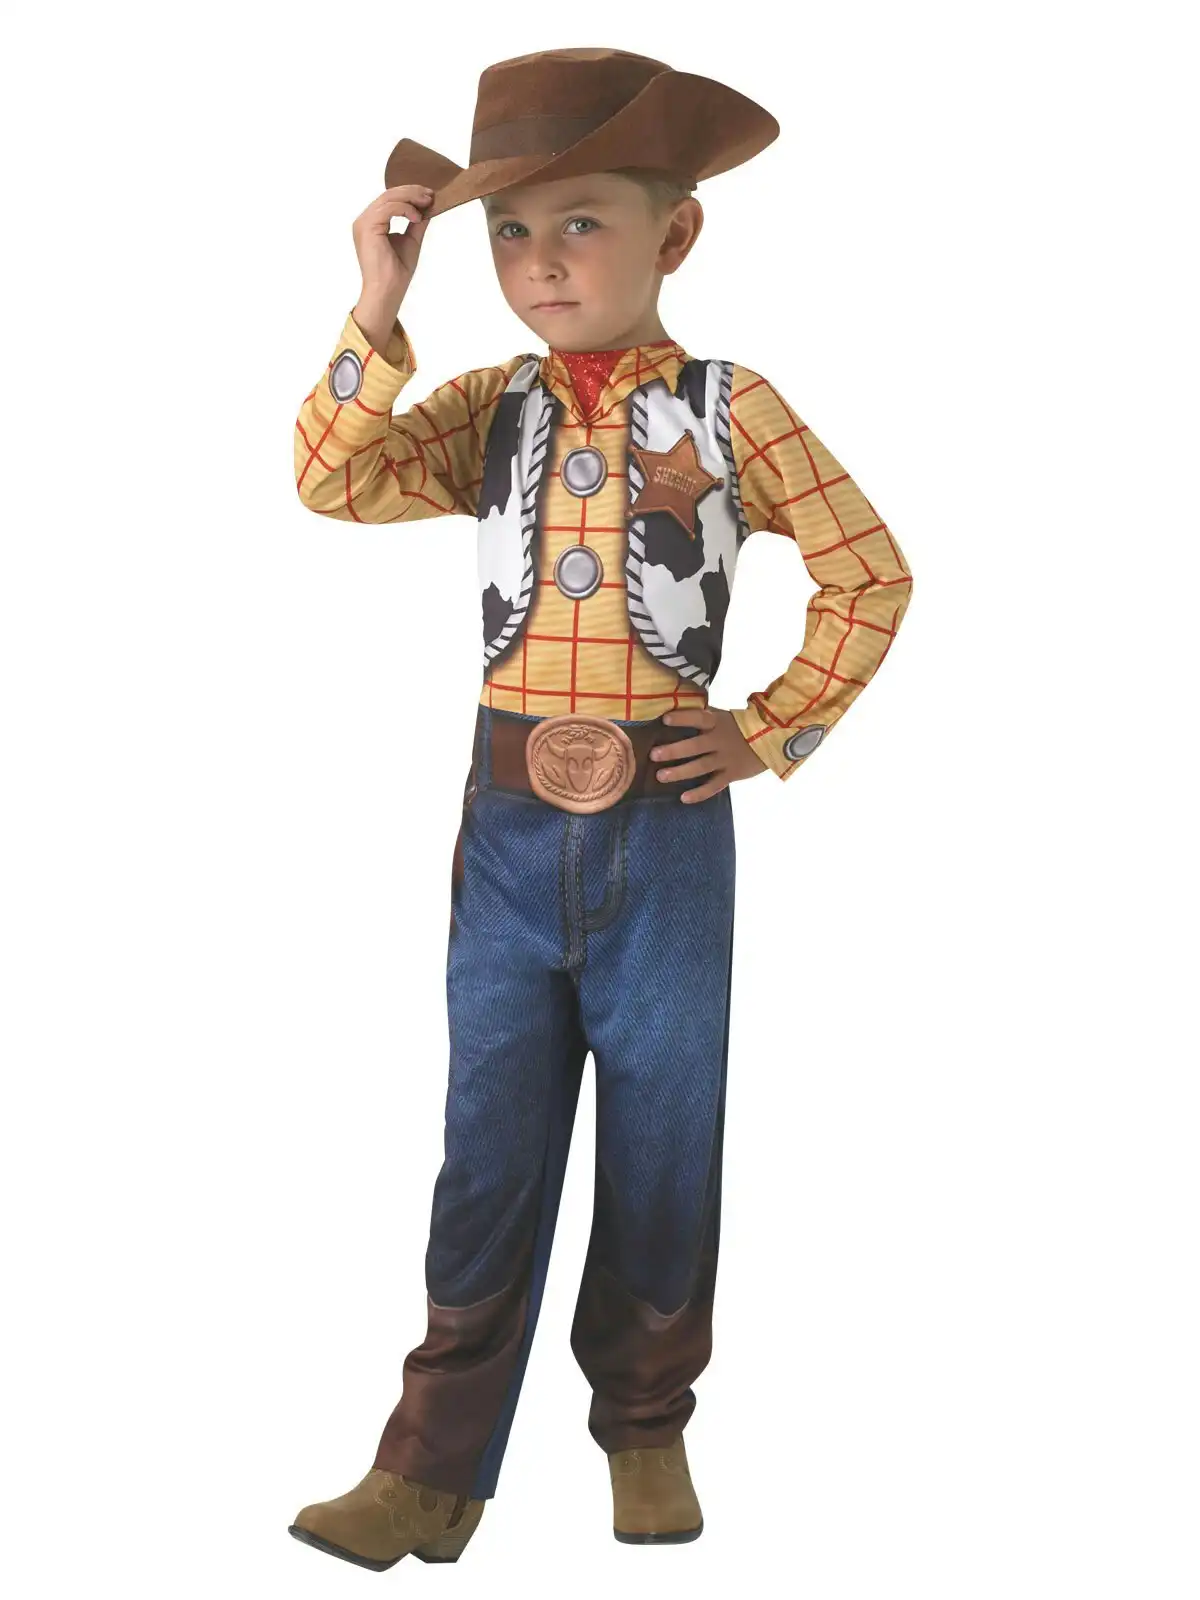 Disney Pixar Woody Opp Dress Up Party Costume Kids/Boys/Children Size 3-5